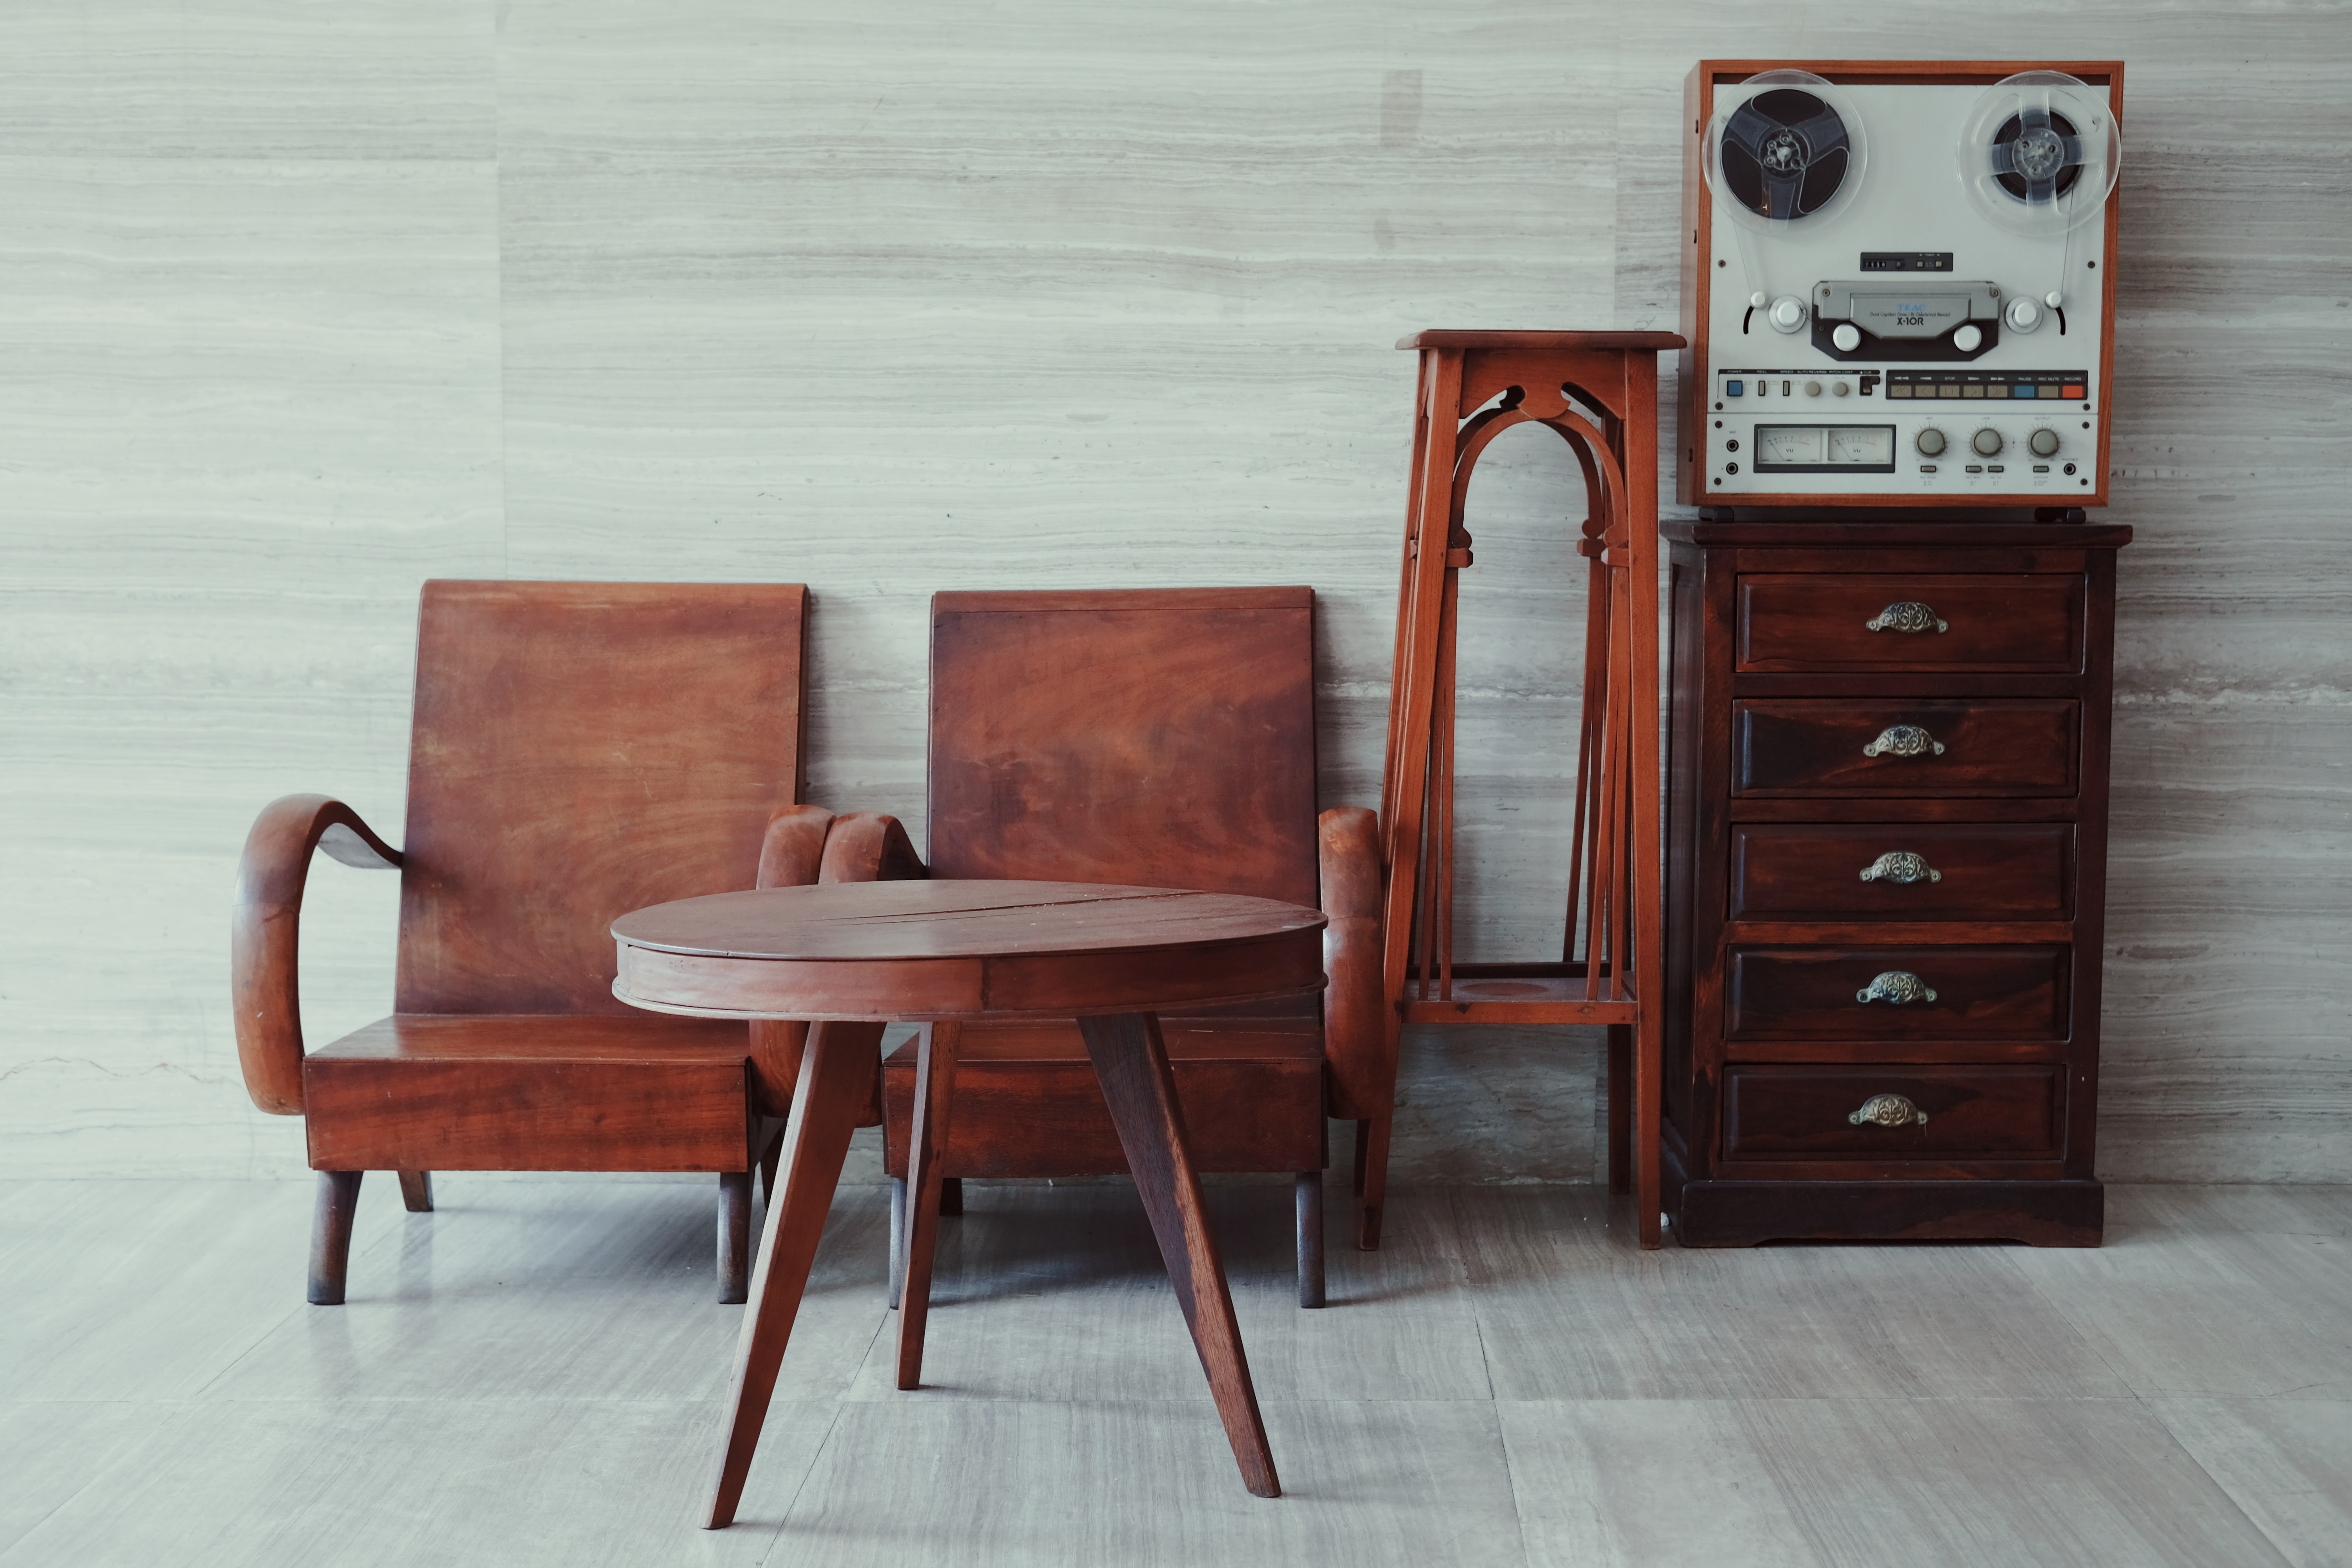 Benefits Of Buying Vintage Furniture